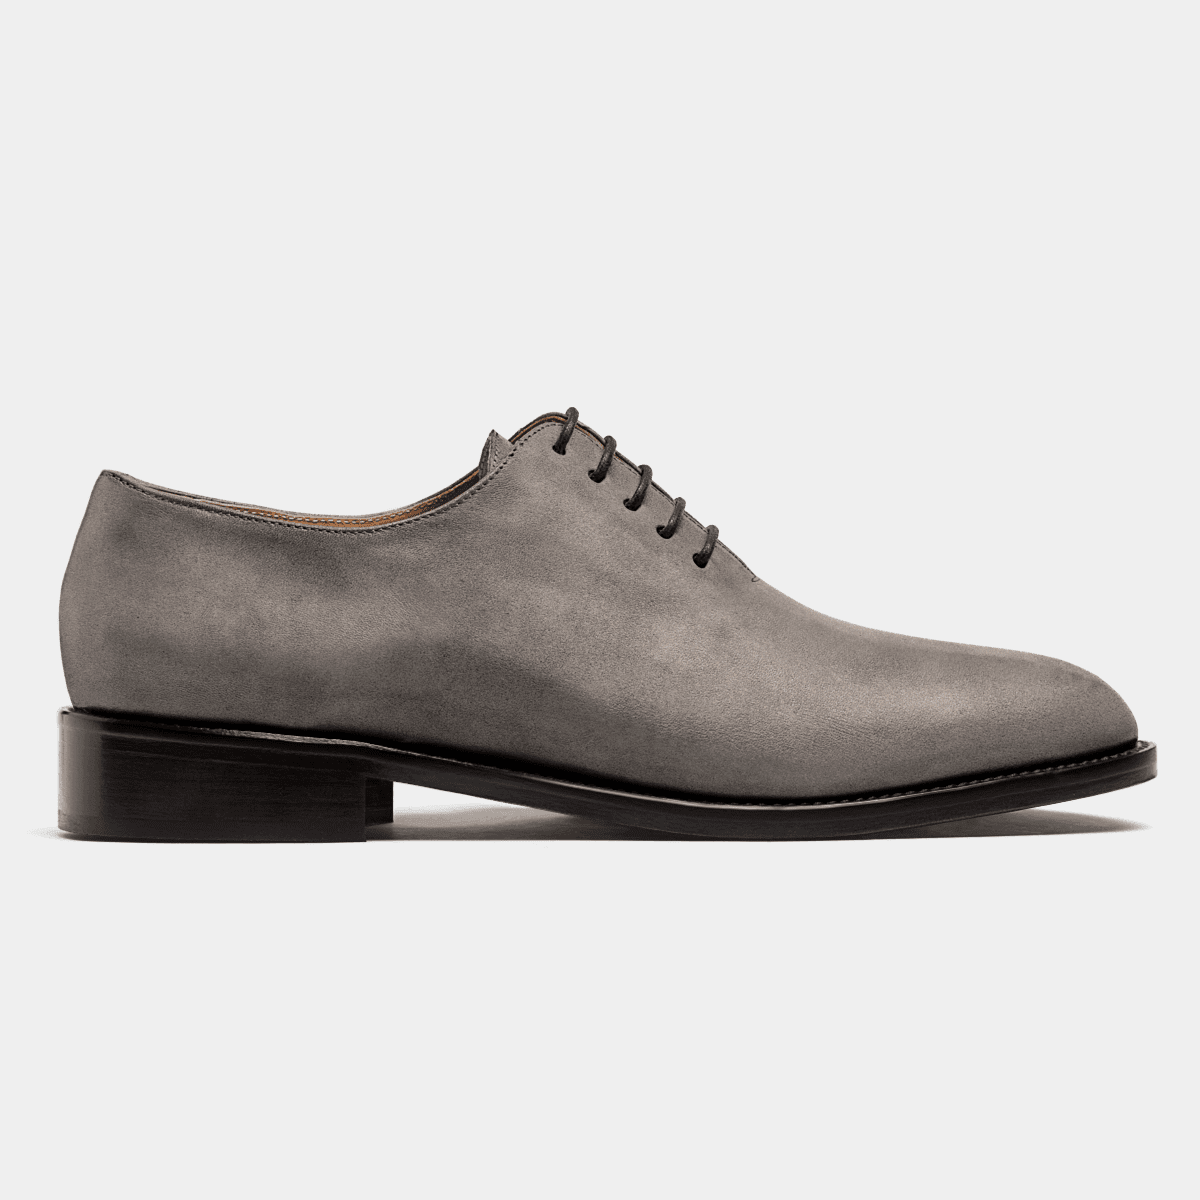 Wholecut Oxford shoes - grey suede